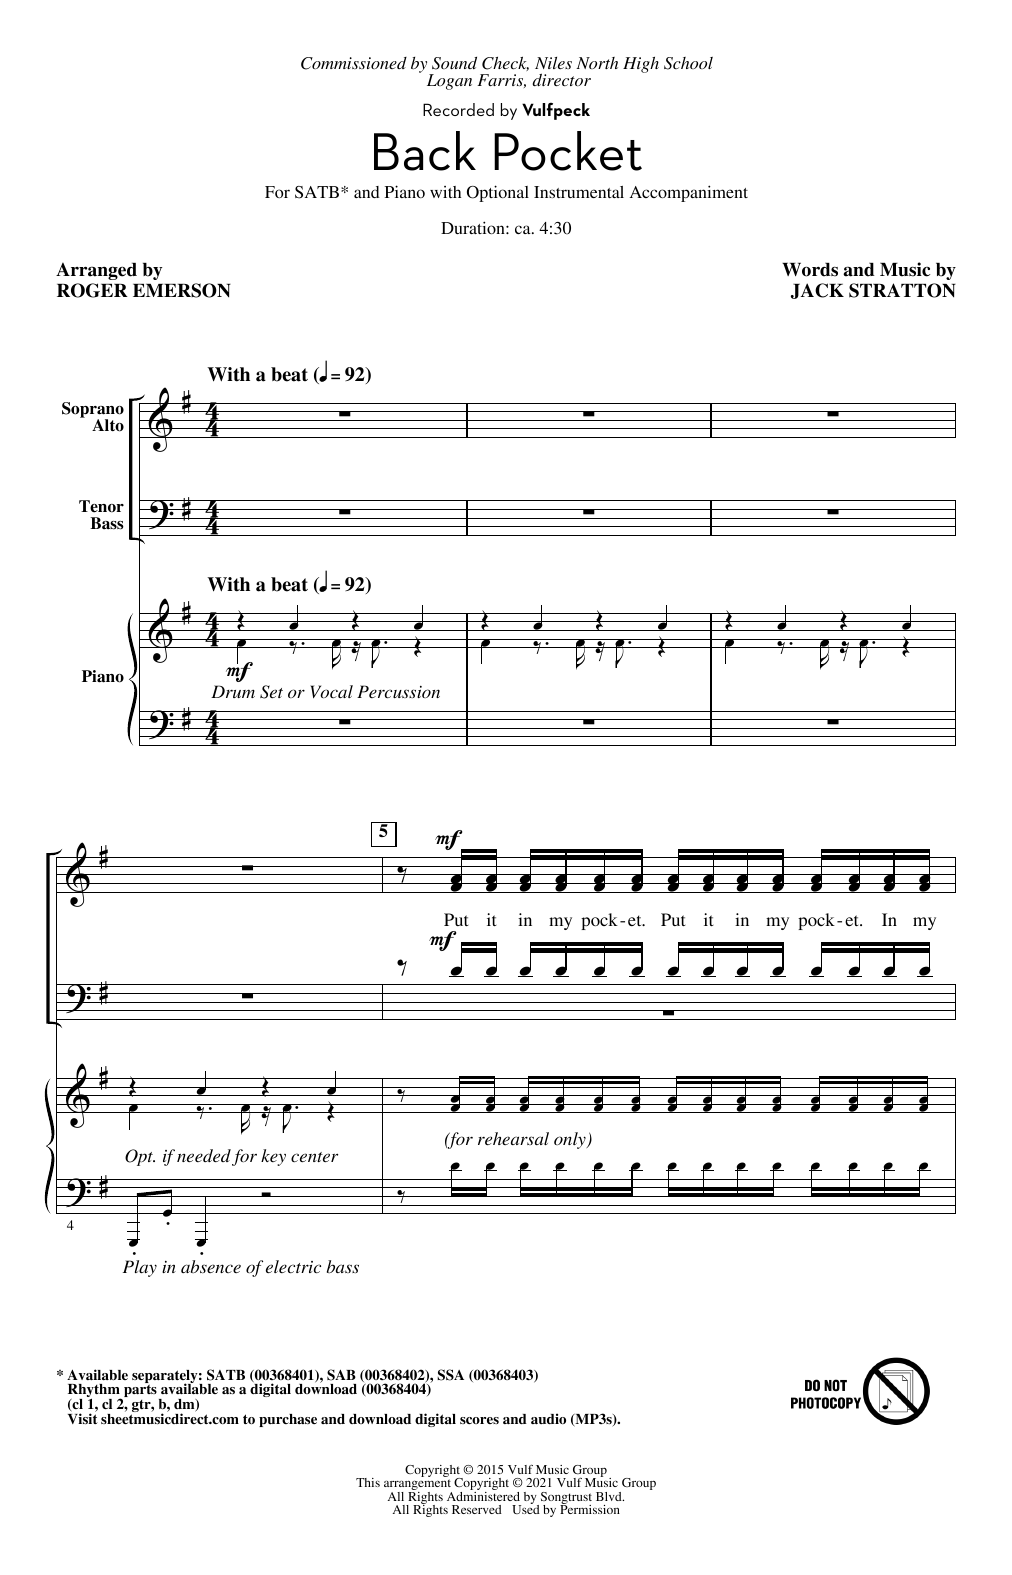 Vulfpeck Back Pocket (arr. Roger Emerson) Sheet Music Notes & Chords for SAB Choir - Download or Print PDF